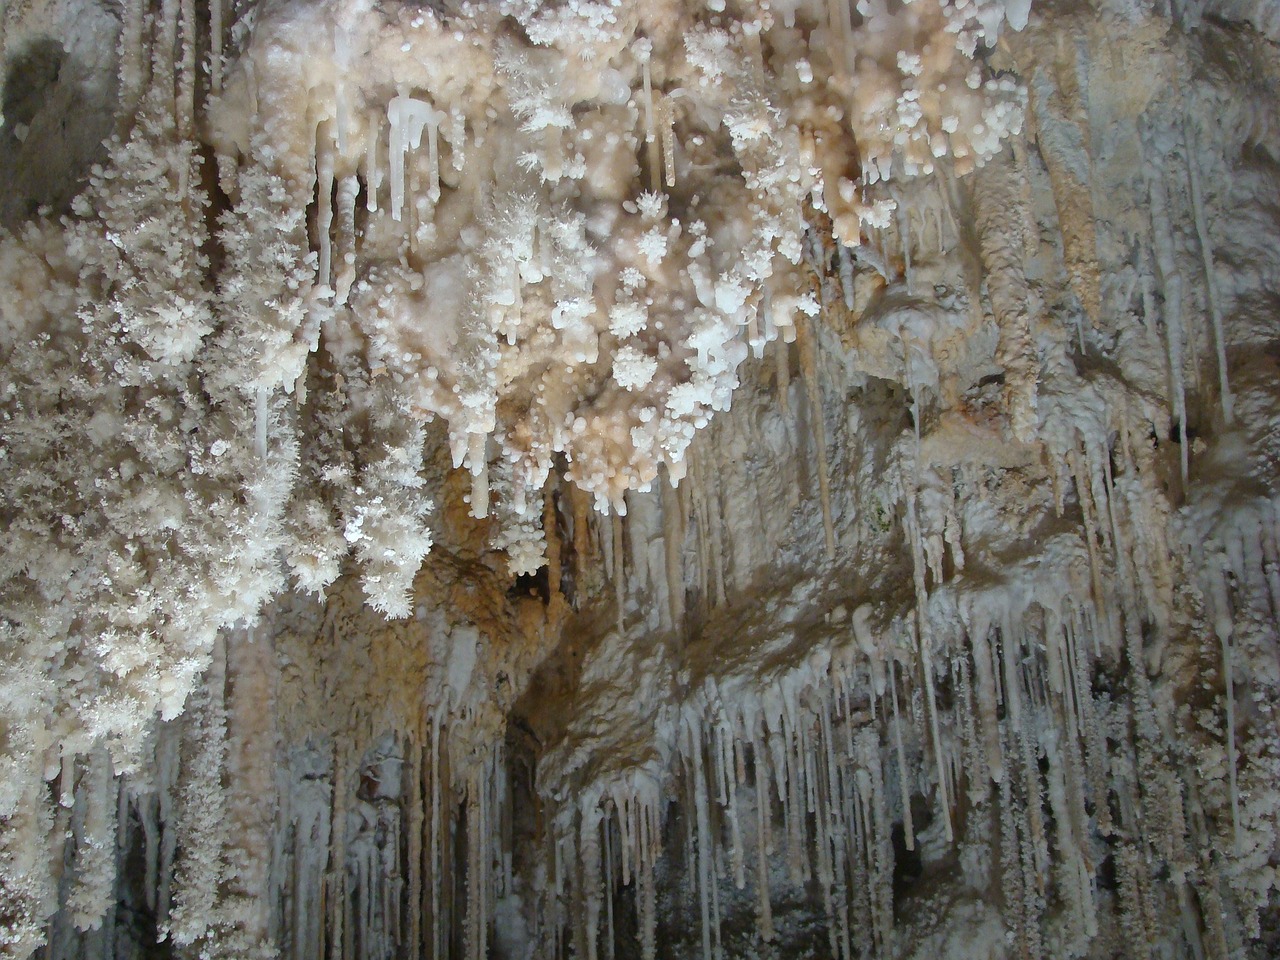 cave, stalactites, stalagmites